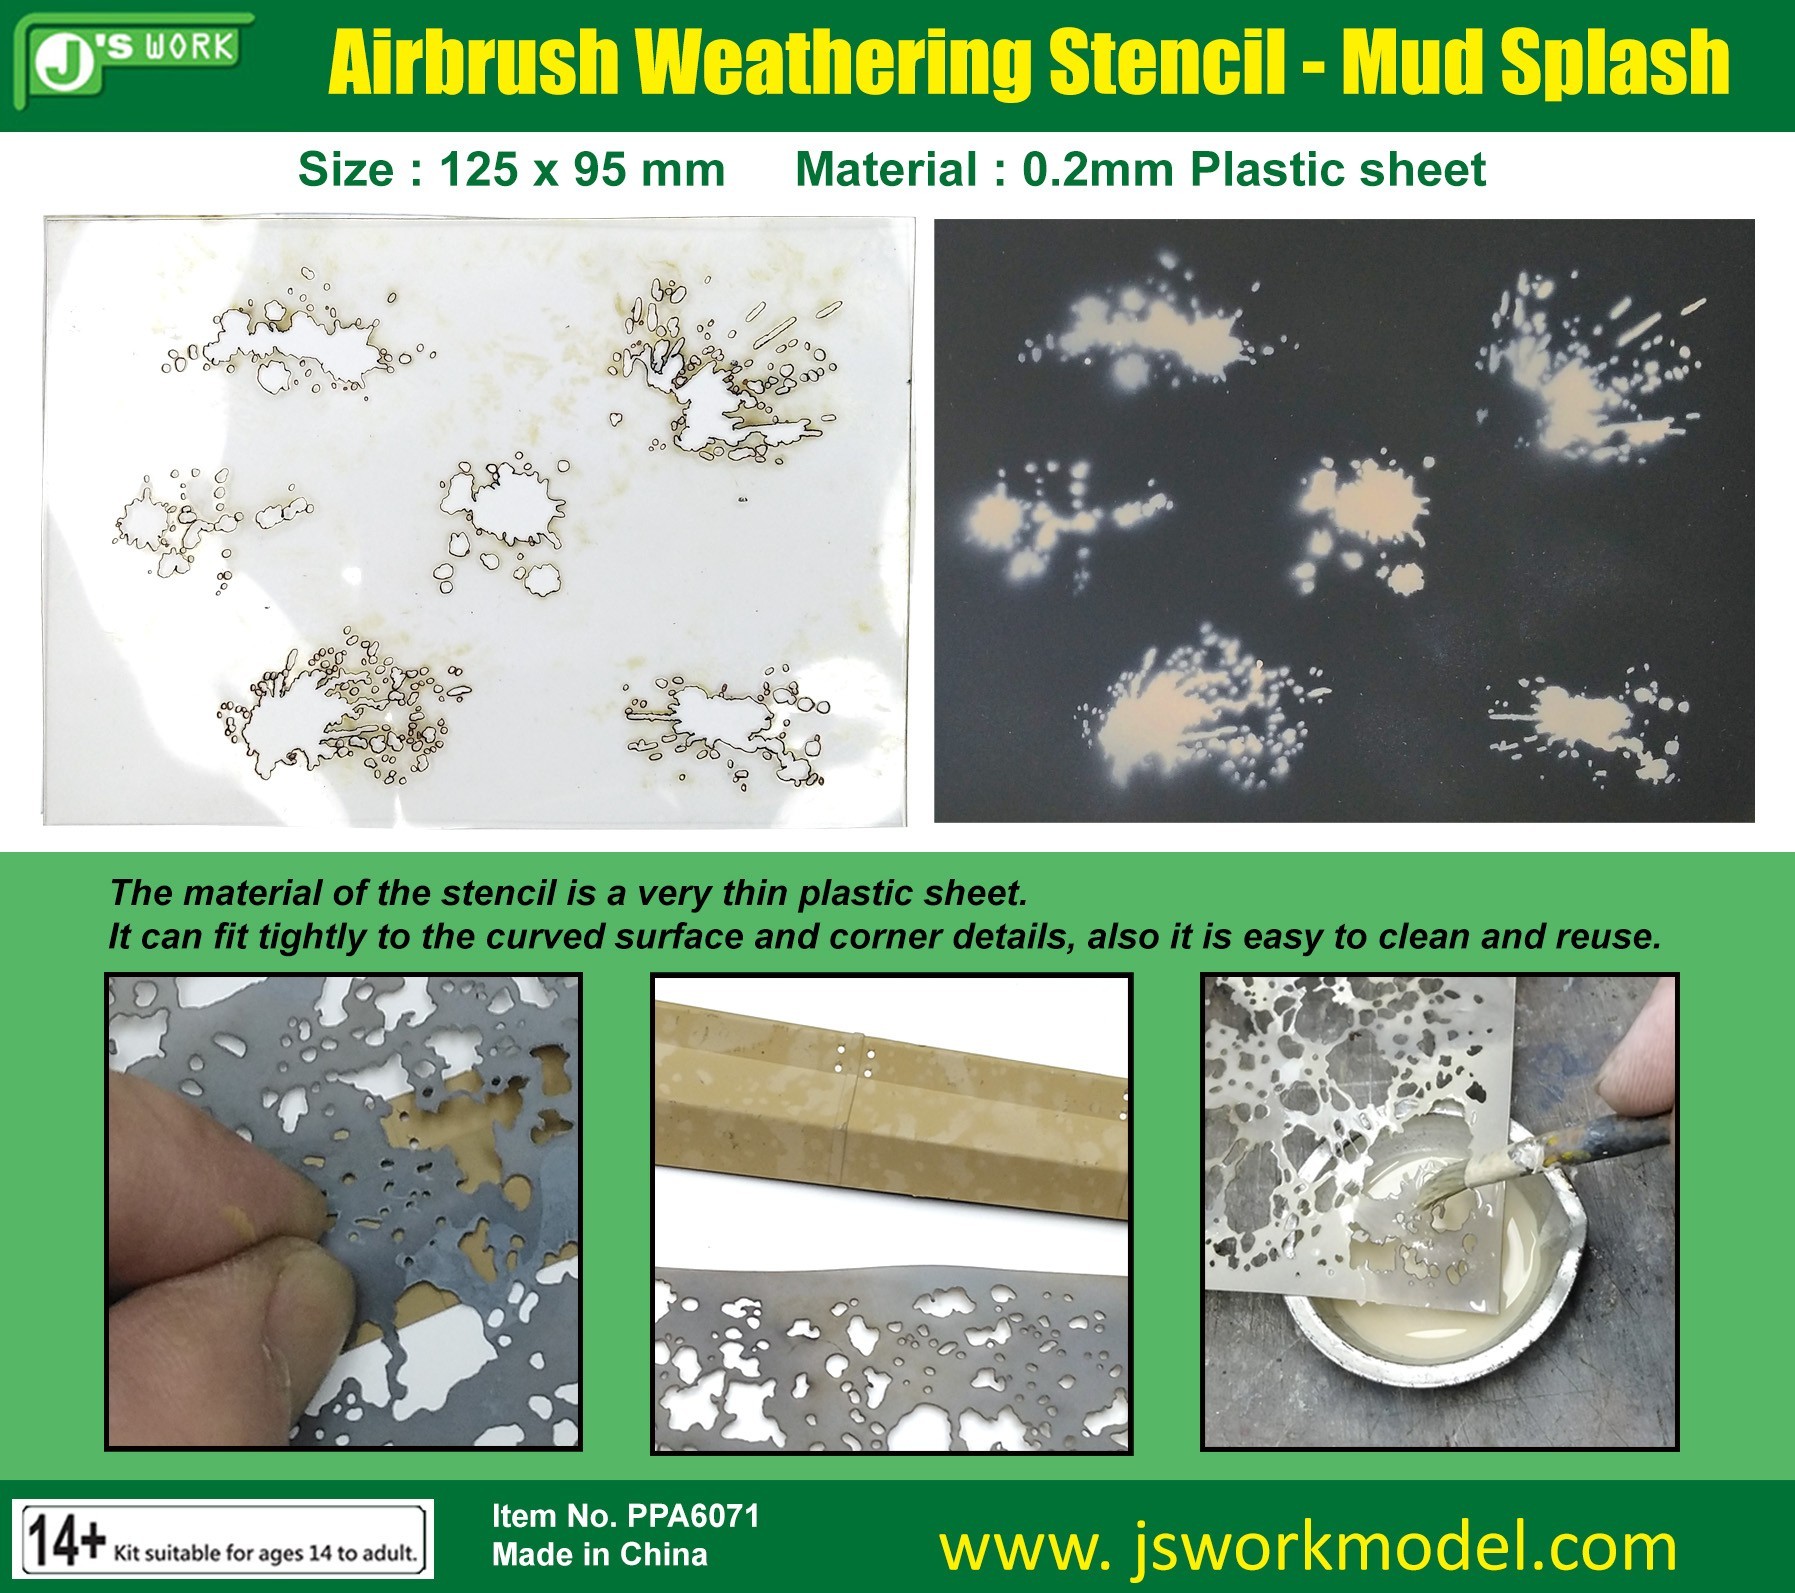 PPA6071 Airbrush Weathering Stencil - Mud Splash